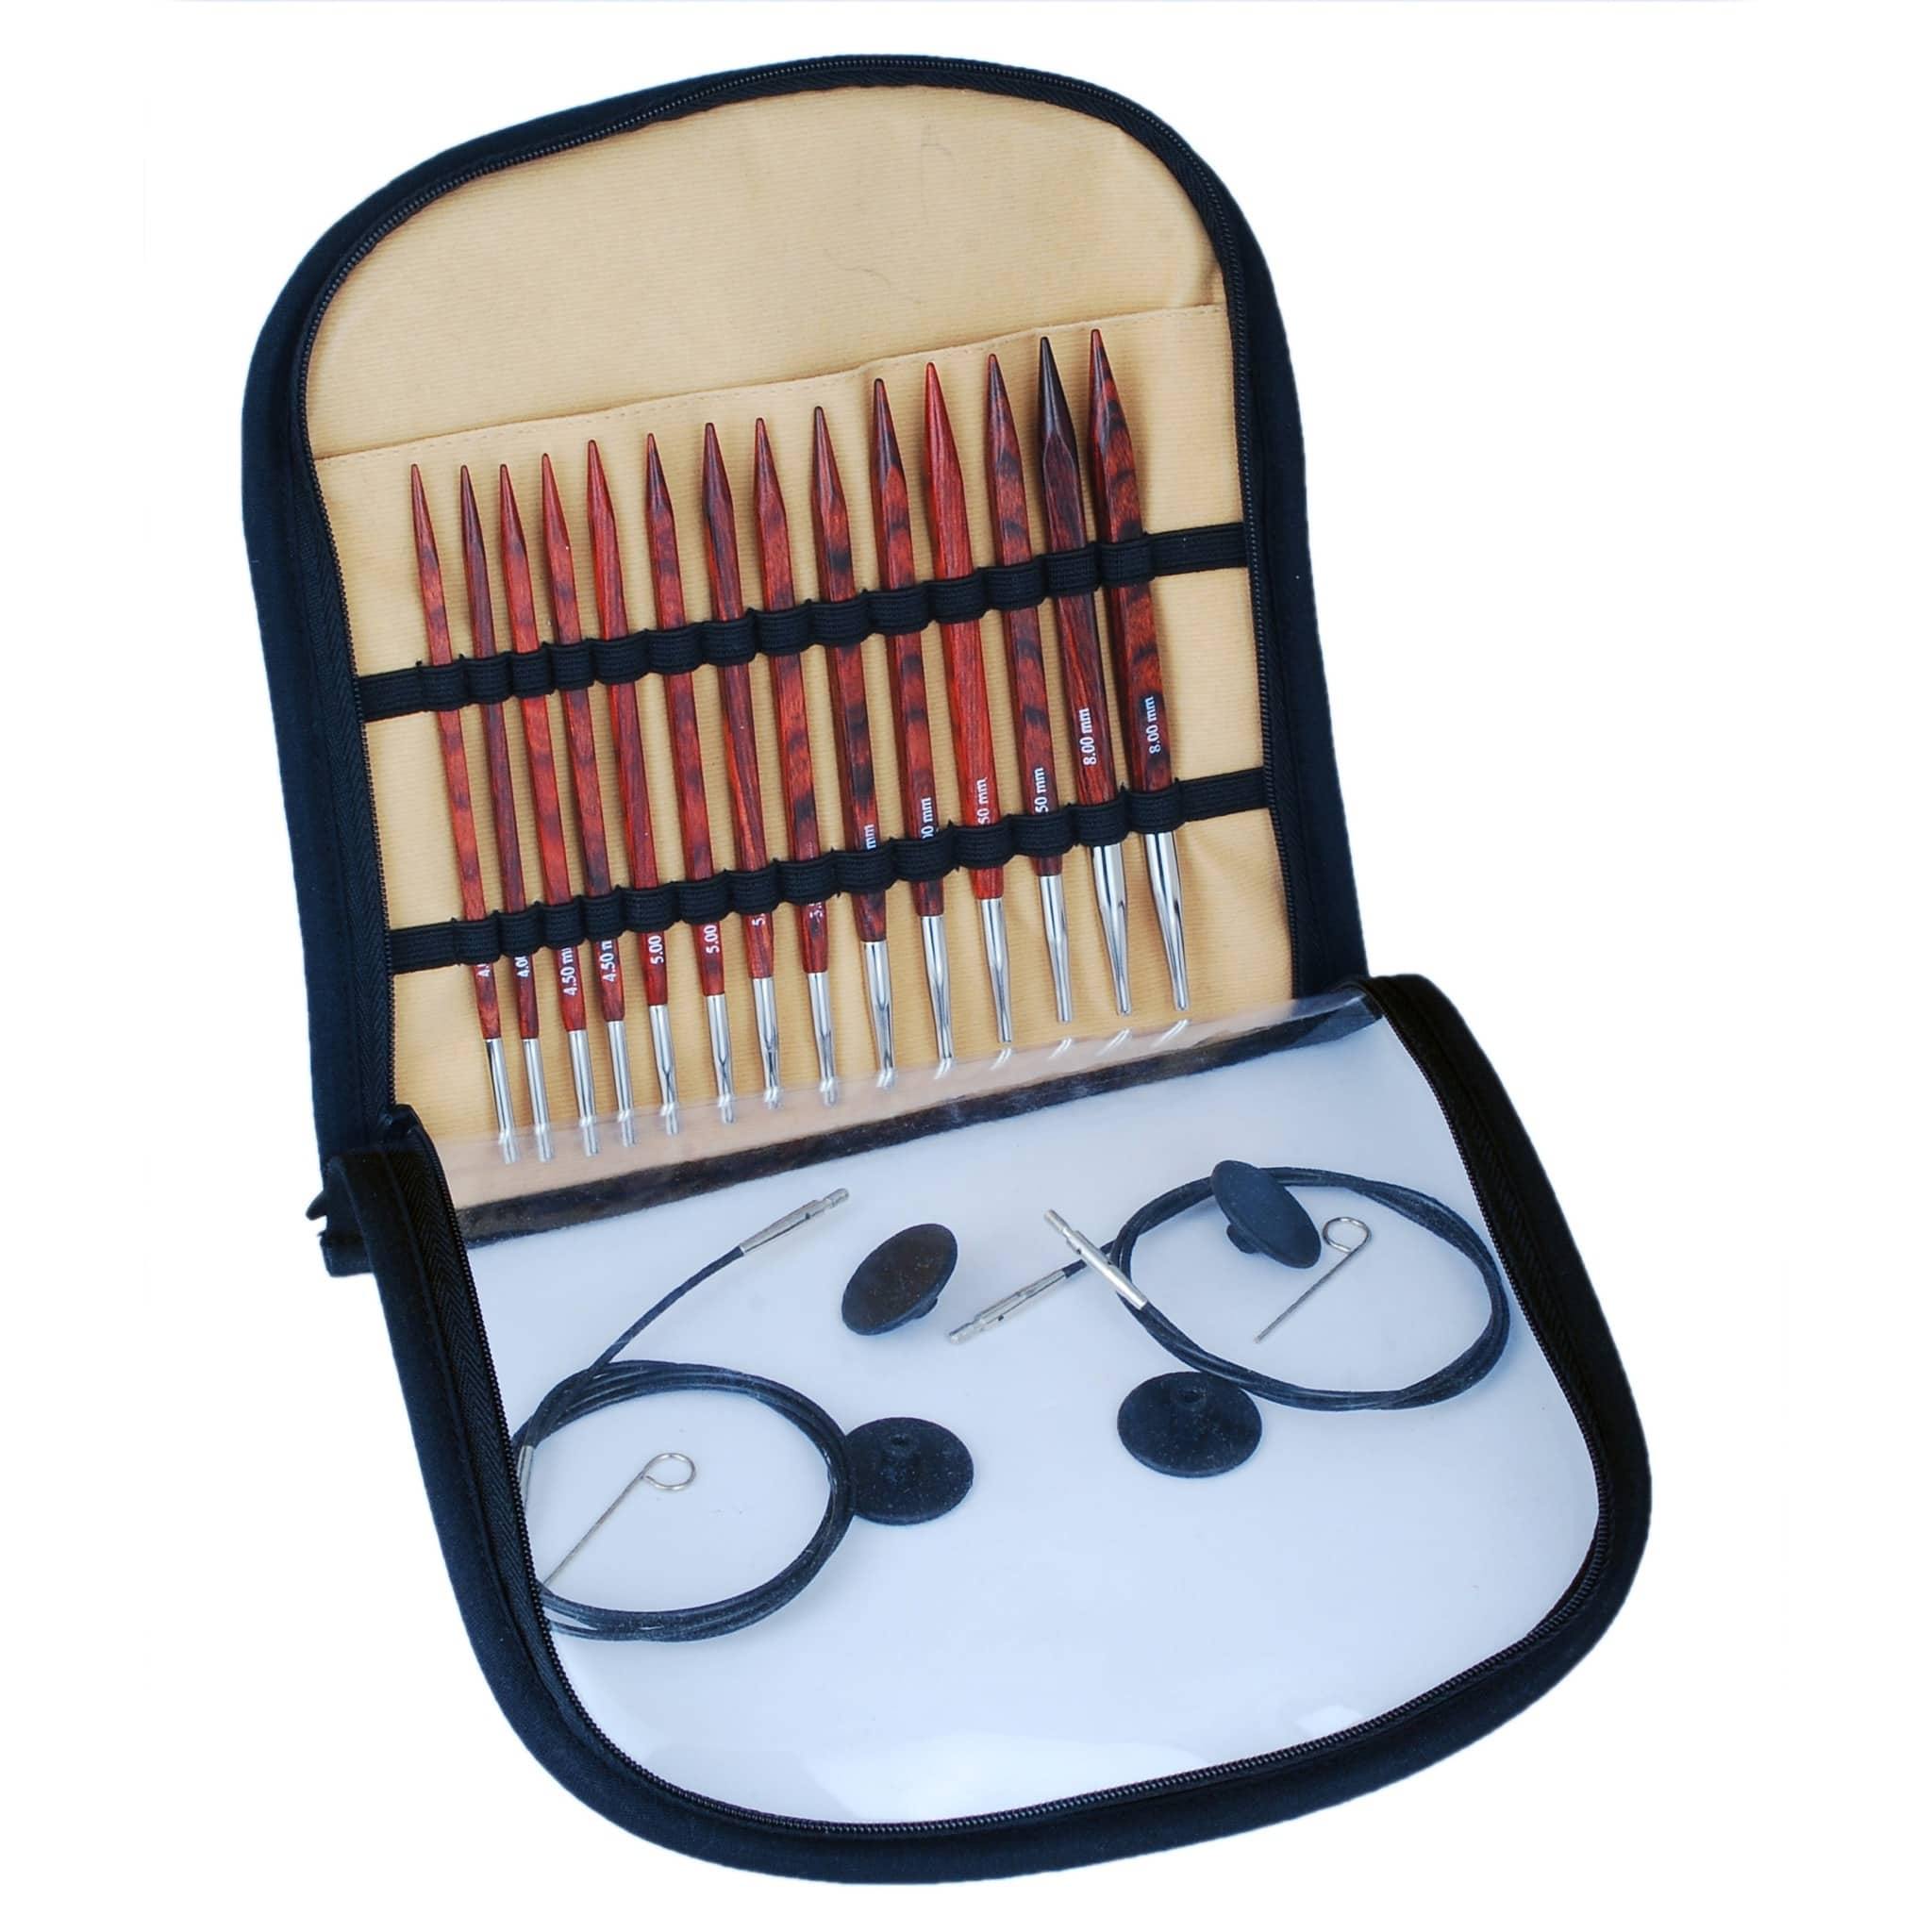 Knitpro Cubics Knitting Pins Circular Interchangeable - Deluxe Set